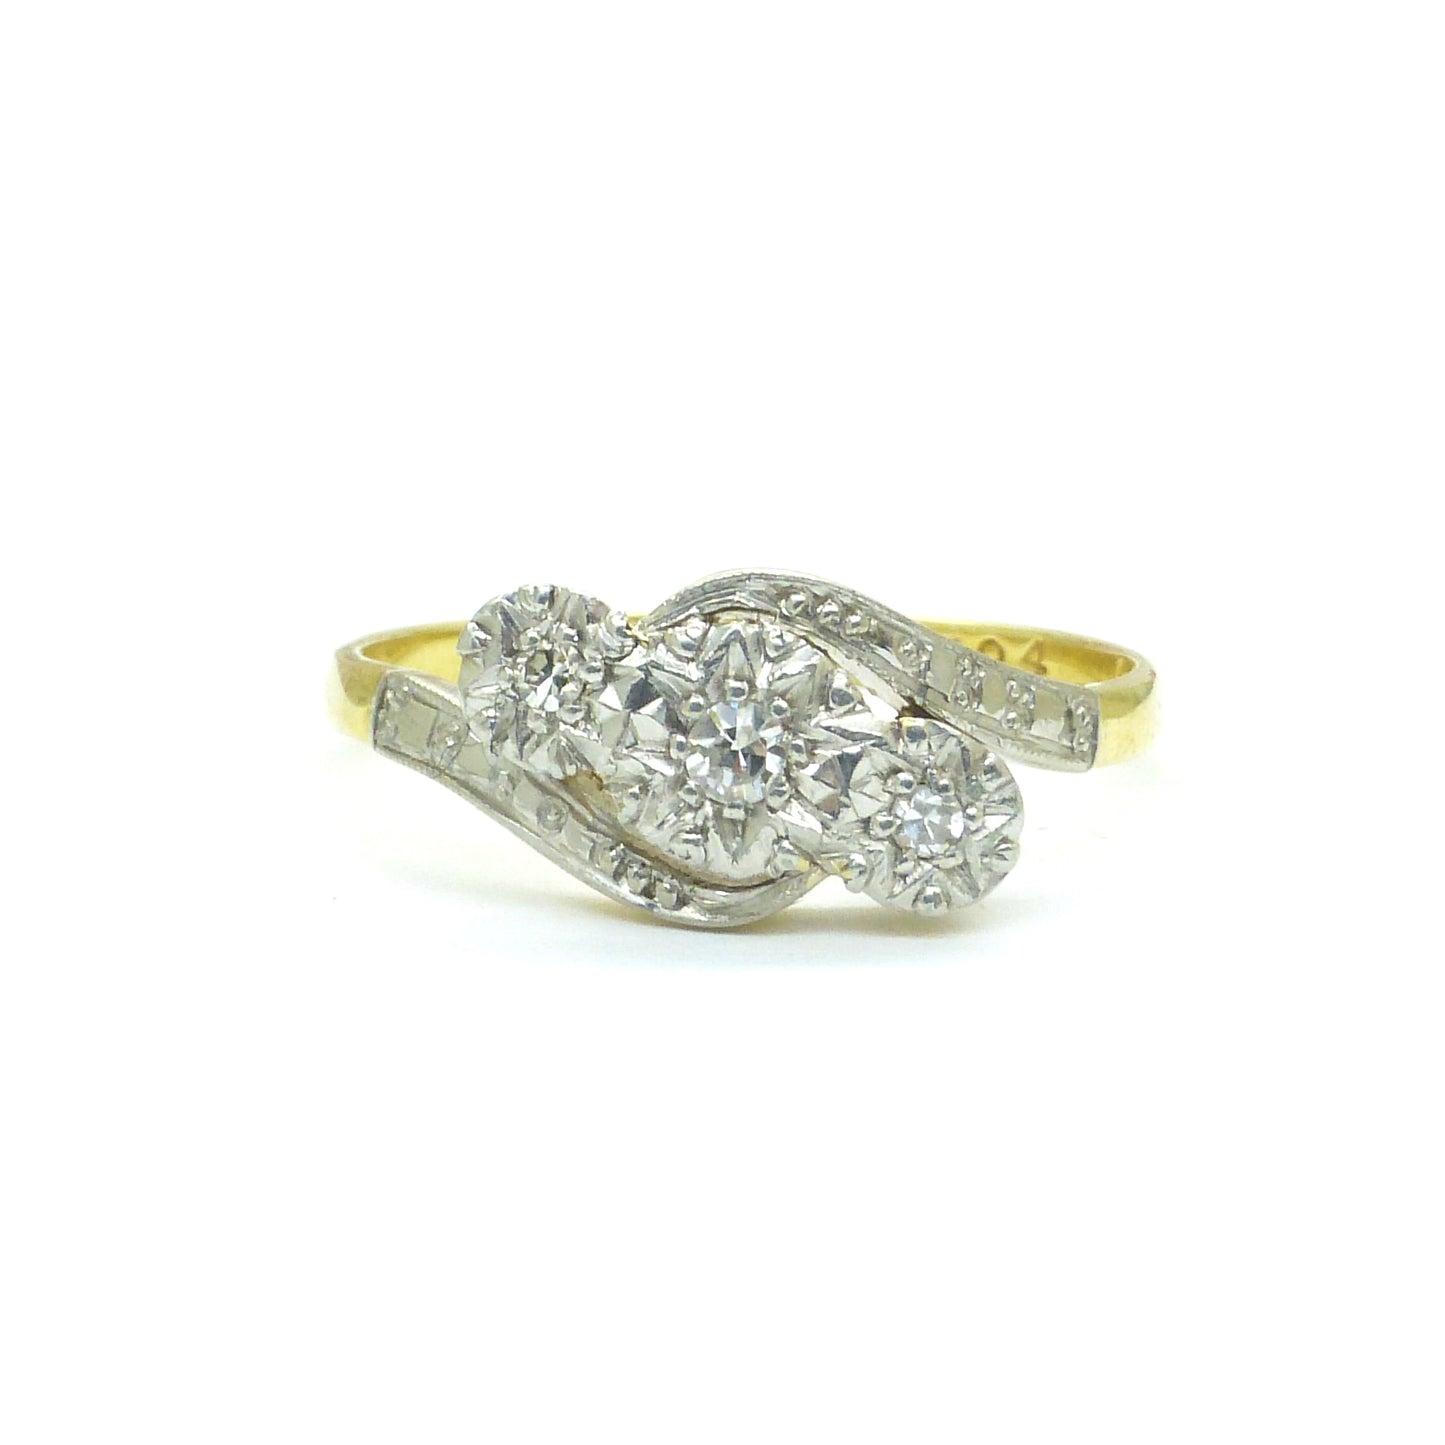 Vintage 18ct platinum diamond trilogy ring c1930's ~ 1950's